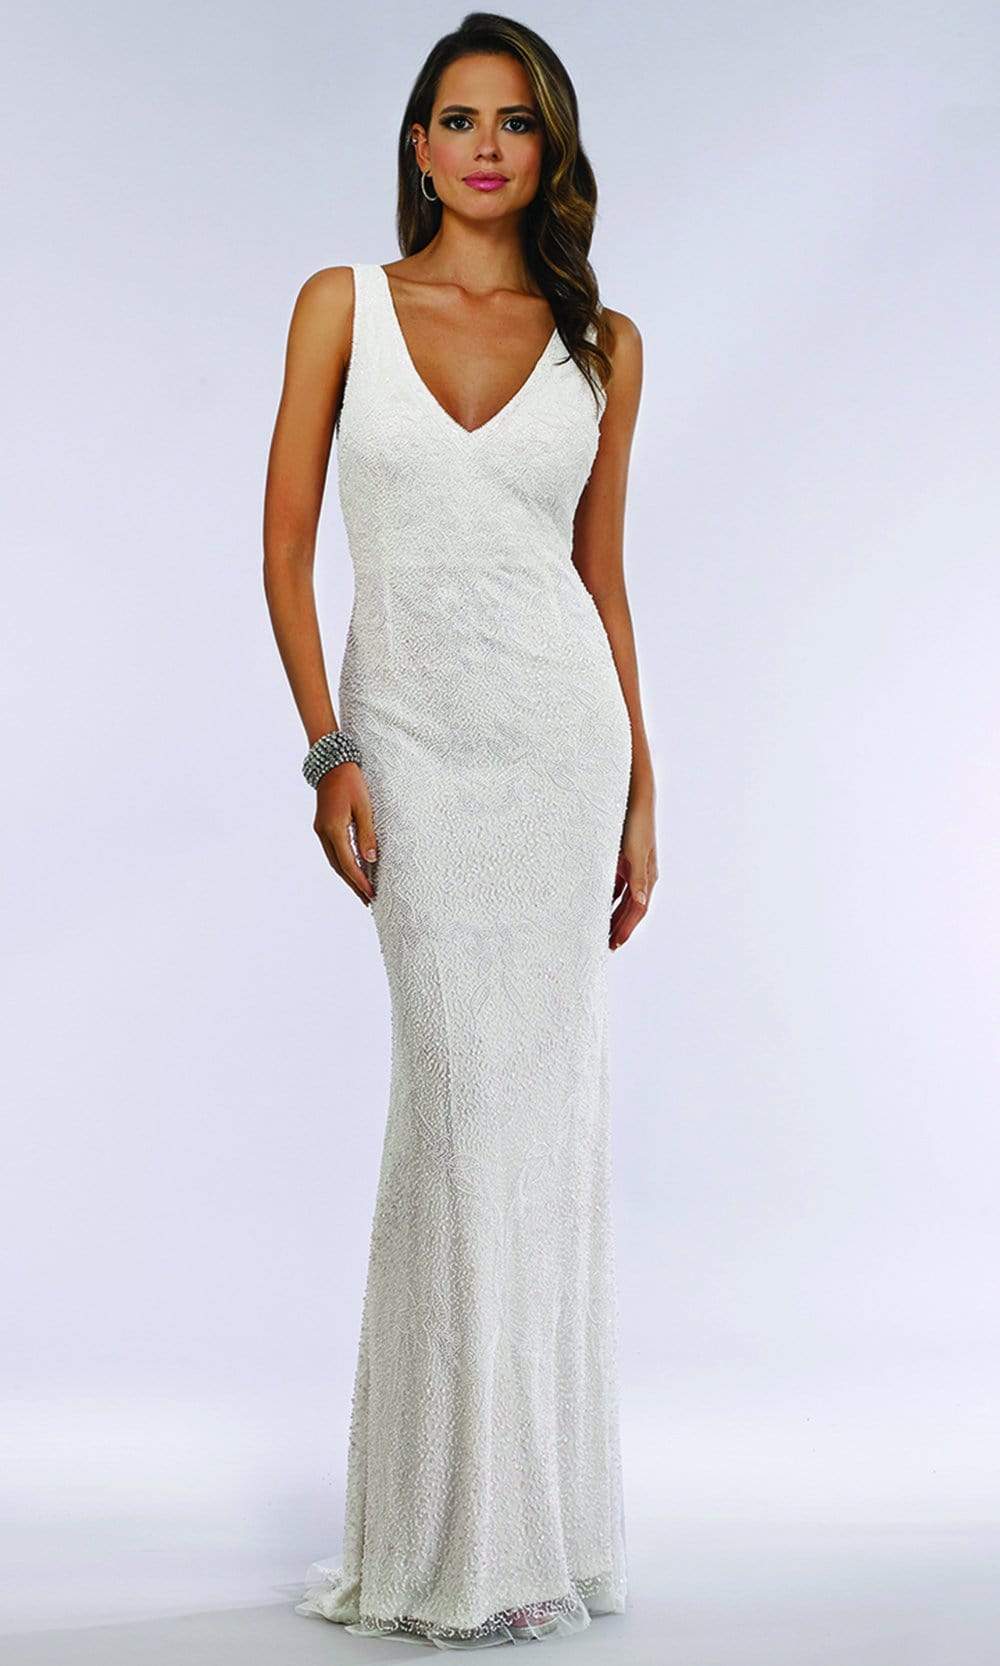 Lara Dresses - 51049 V Neck Sleeveless Sheath Dress Evening Dresses 0 / Ivory